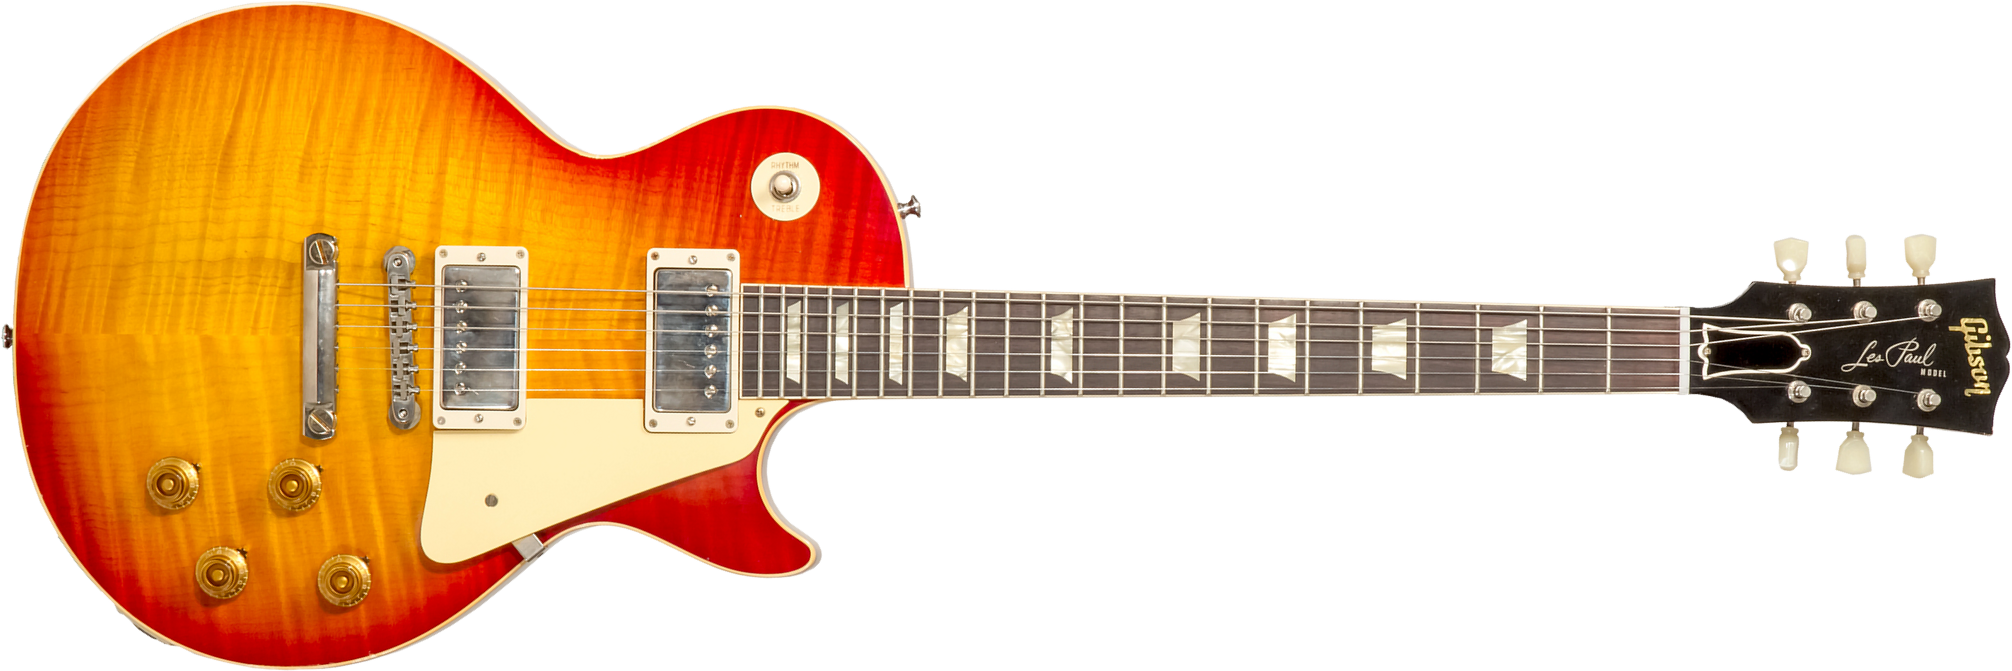 Gibson Custom Shop M2m Les Paul Standard 1959 Reissue 2h Ht Rw #932649 - Murphy Lab Light Aged Ice Tea Fade - Enkel gesneden elektrische gitaar - Main